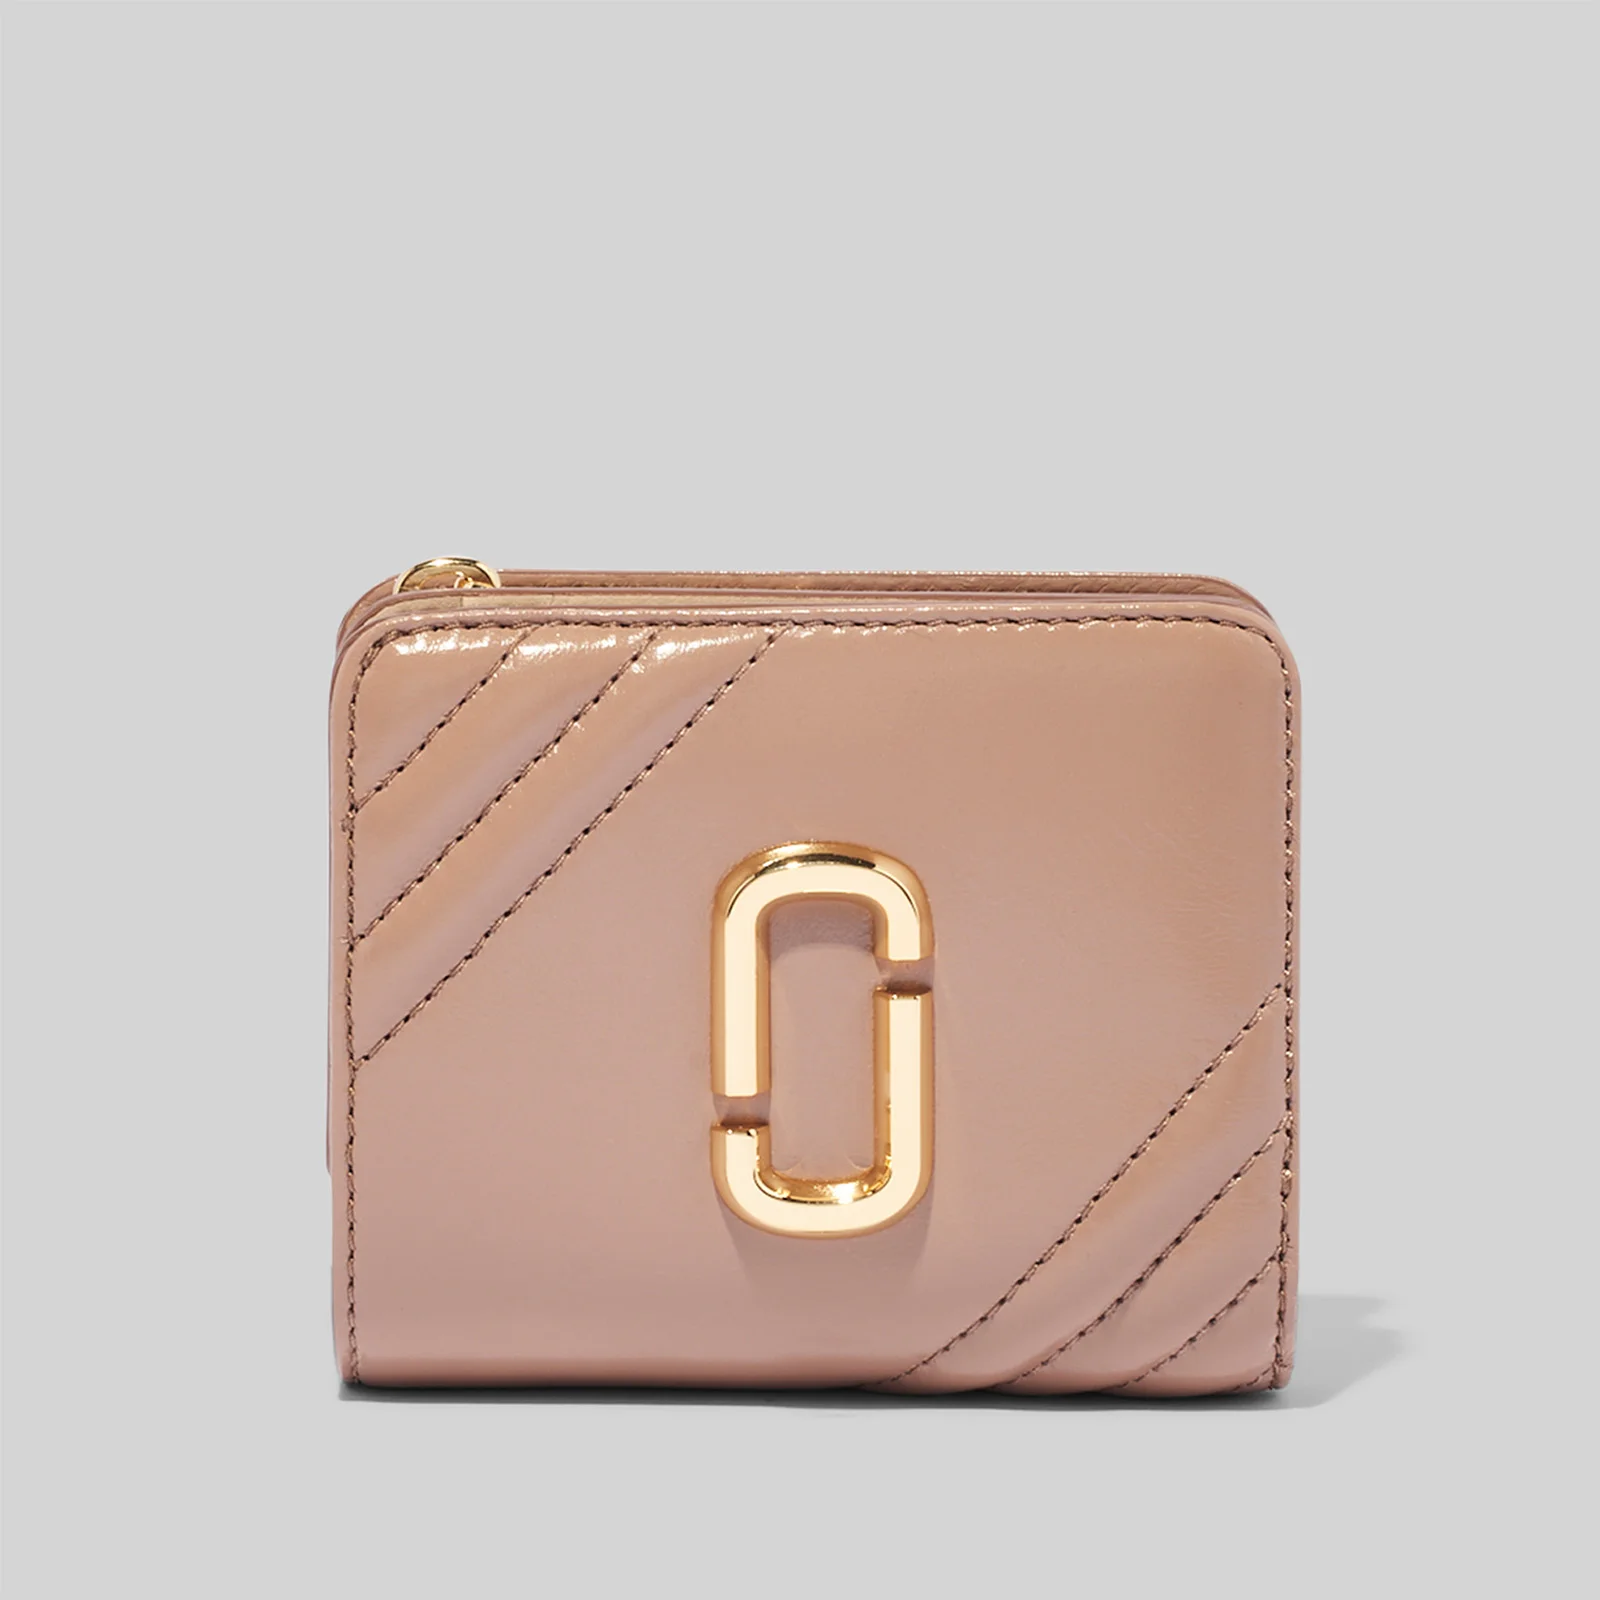 Marc Jacobs Women's Glamshot Mini Compact Wallet - Dusty Beige Image 1